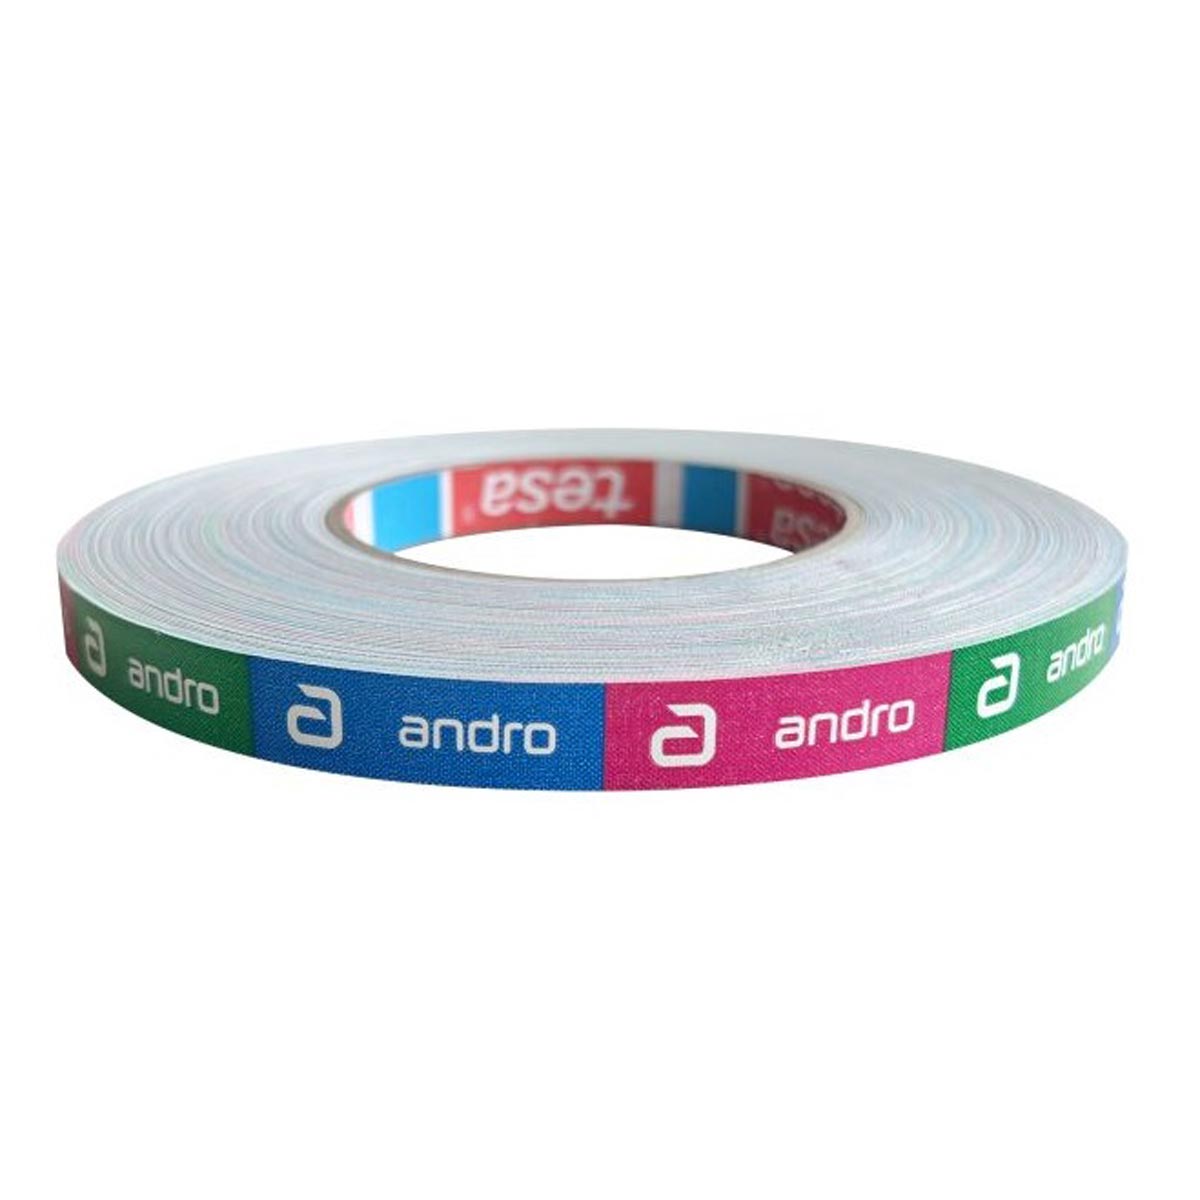 andro Kantenband Colours 10mm/50m Diverse Farben